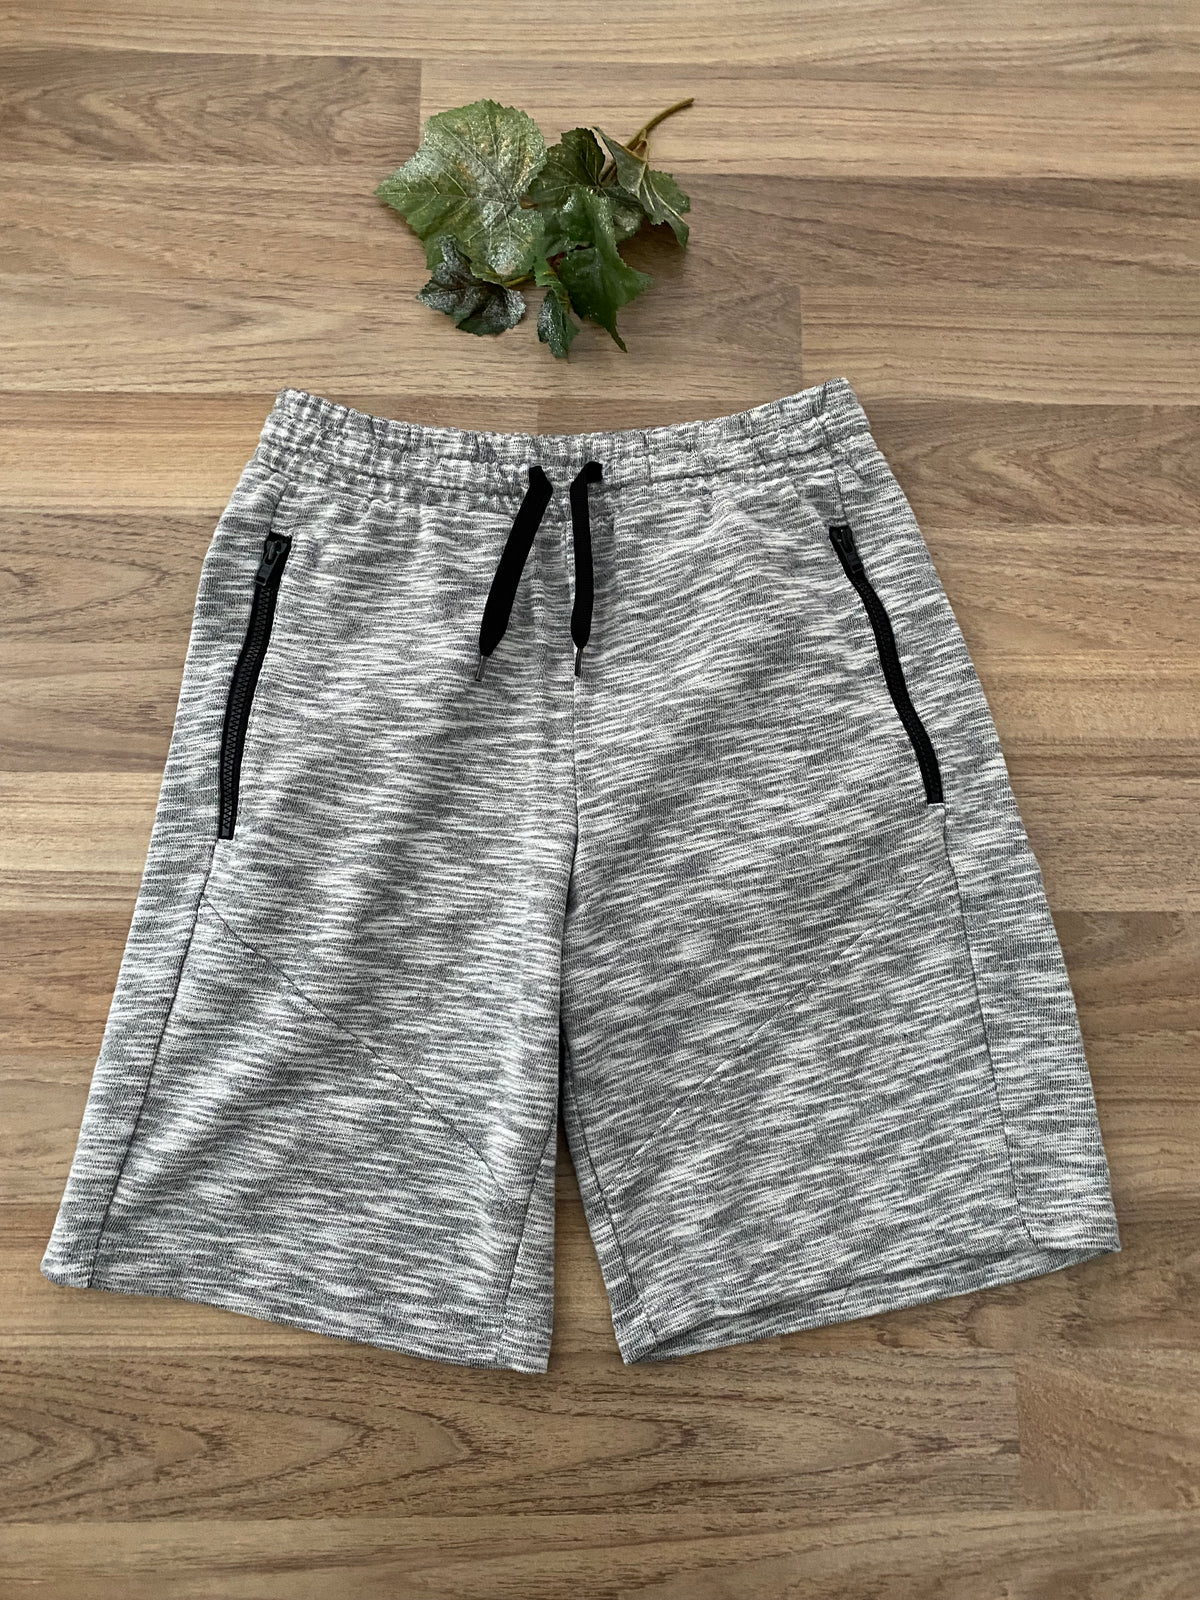 Shorts (Boys Size 8-10)